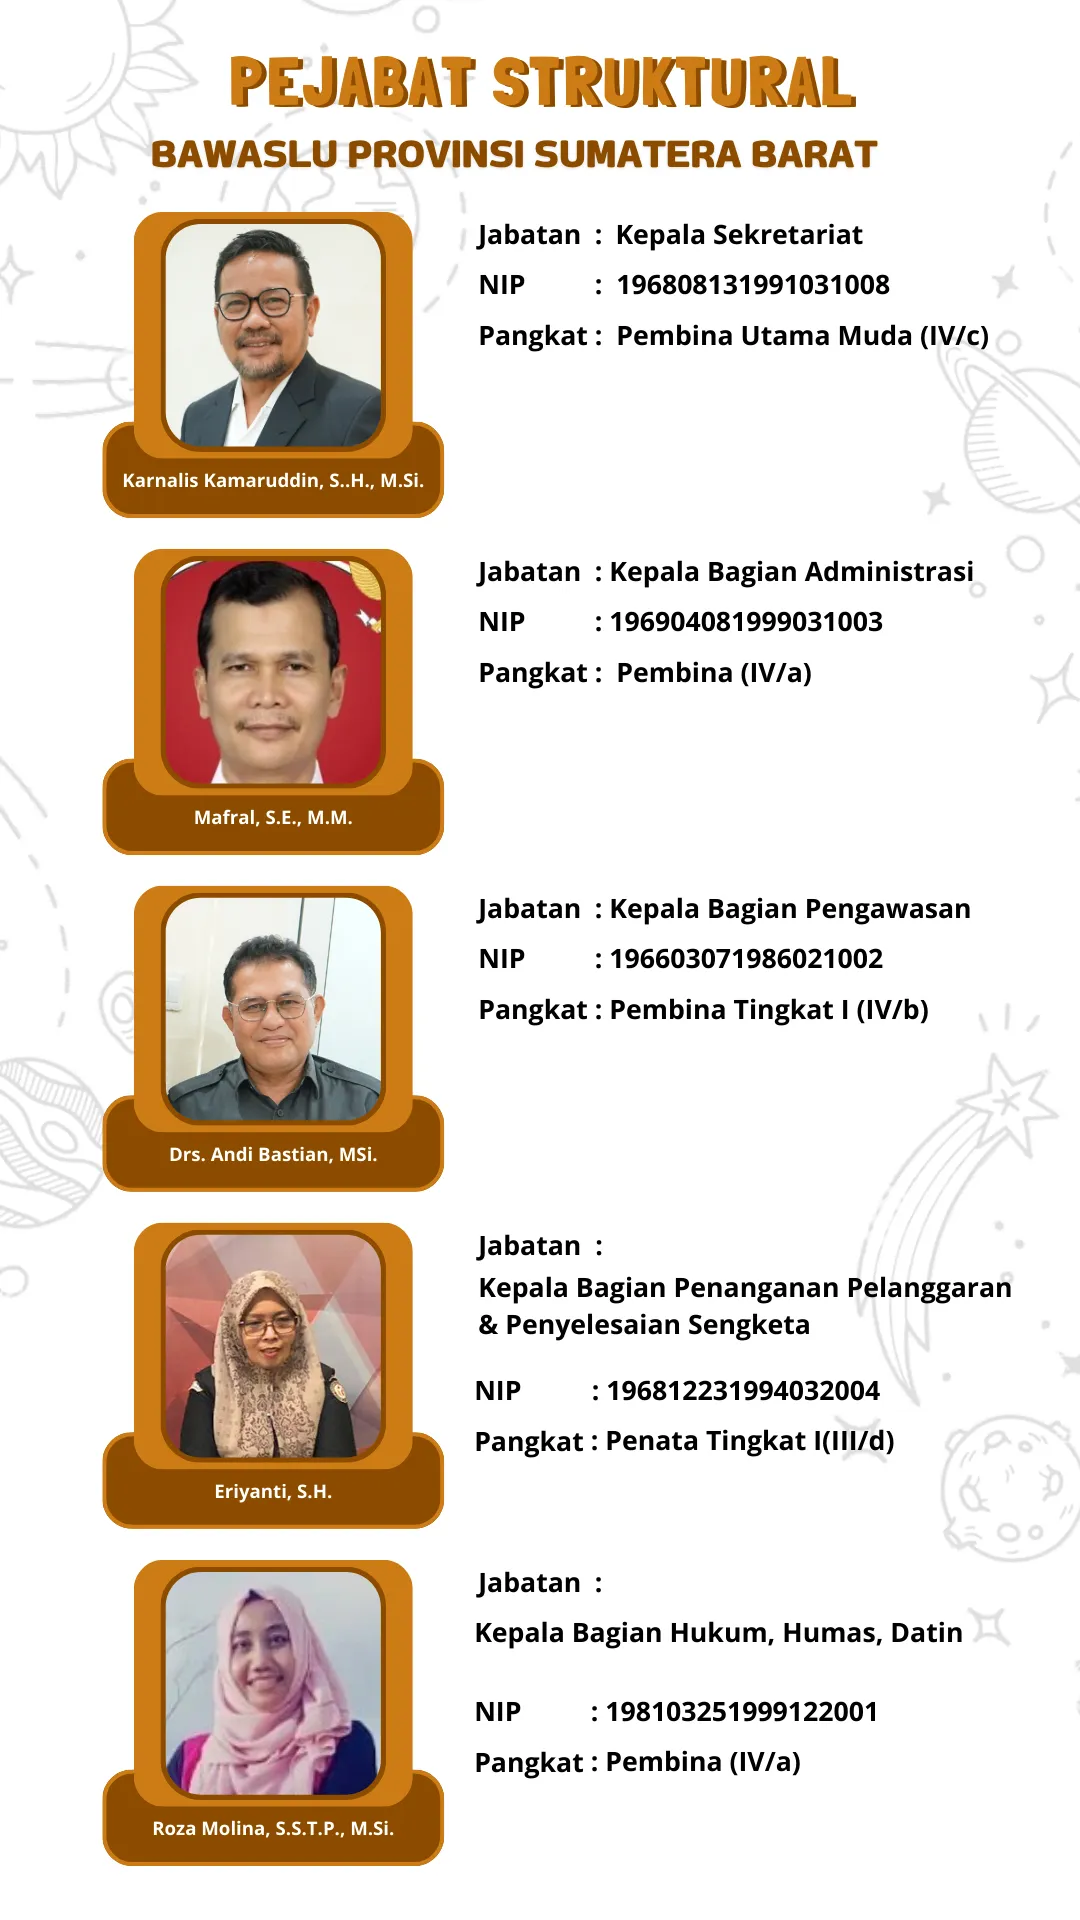 Pejabat Struktural Bawaslu Provinsi Sumatera Barat